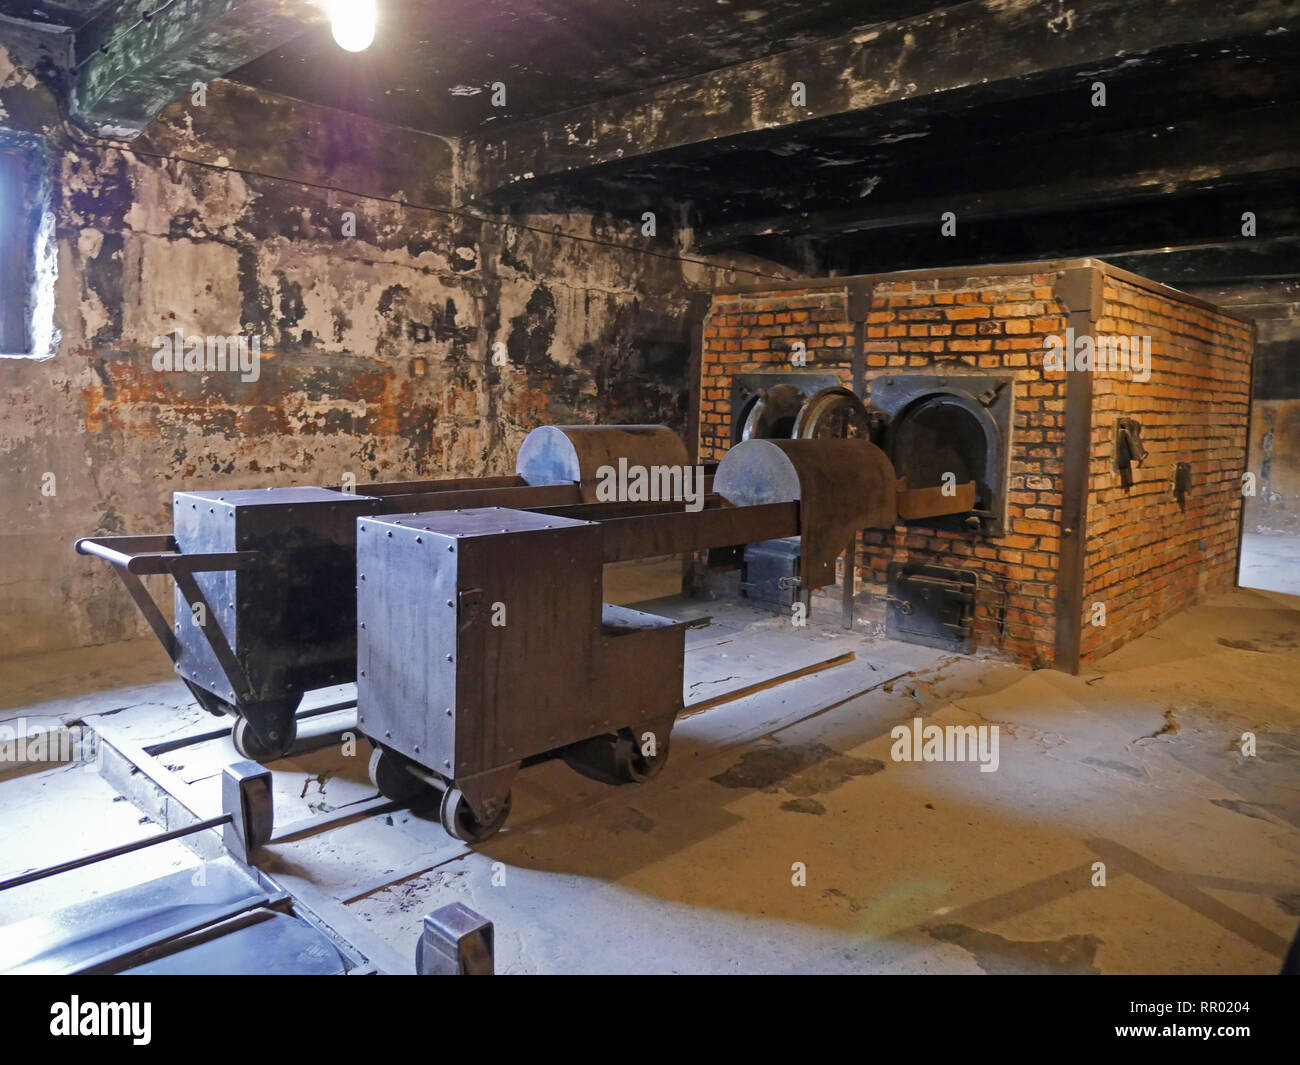 Poland Auschwitz Berkenau Concentration Camp Gas Chamber Ovens